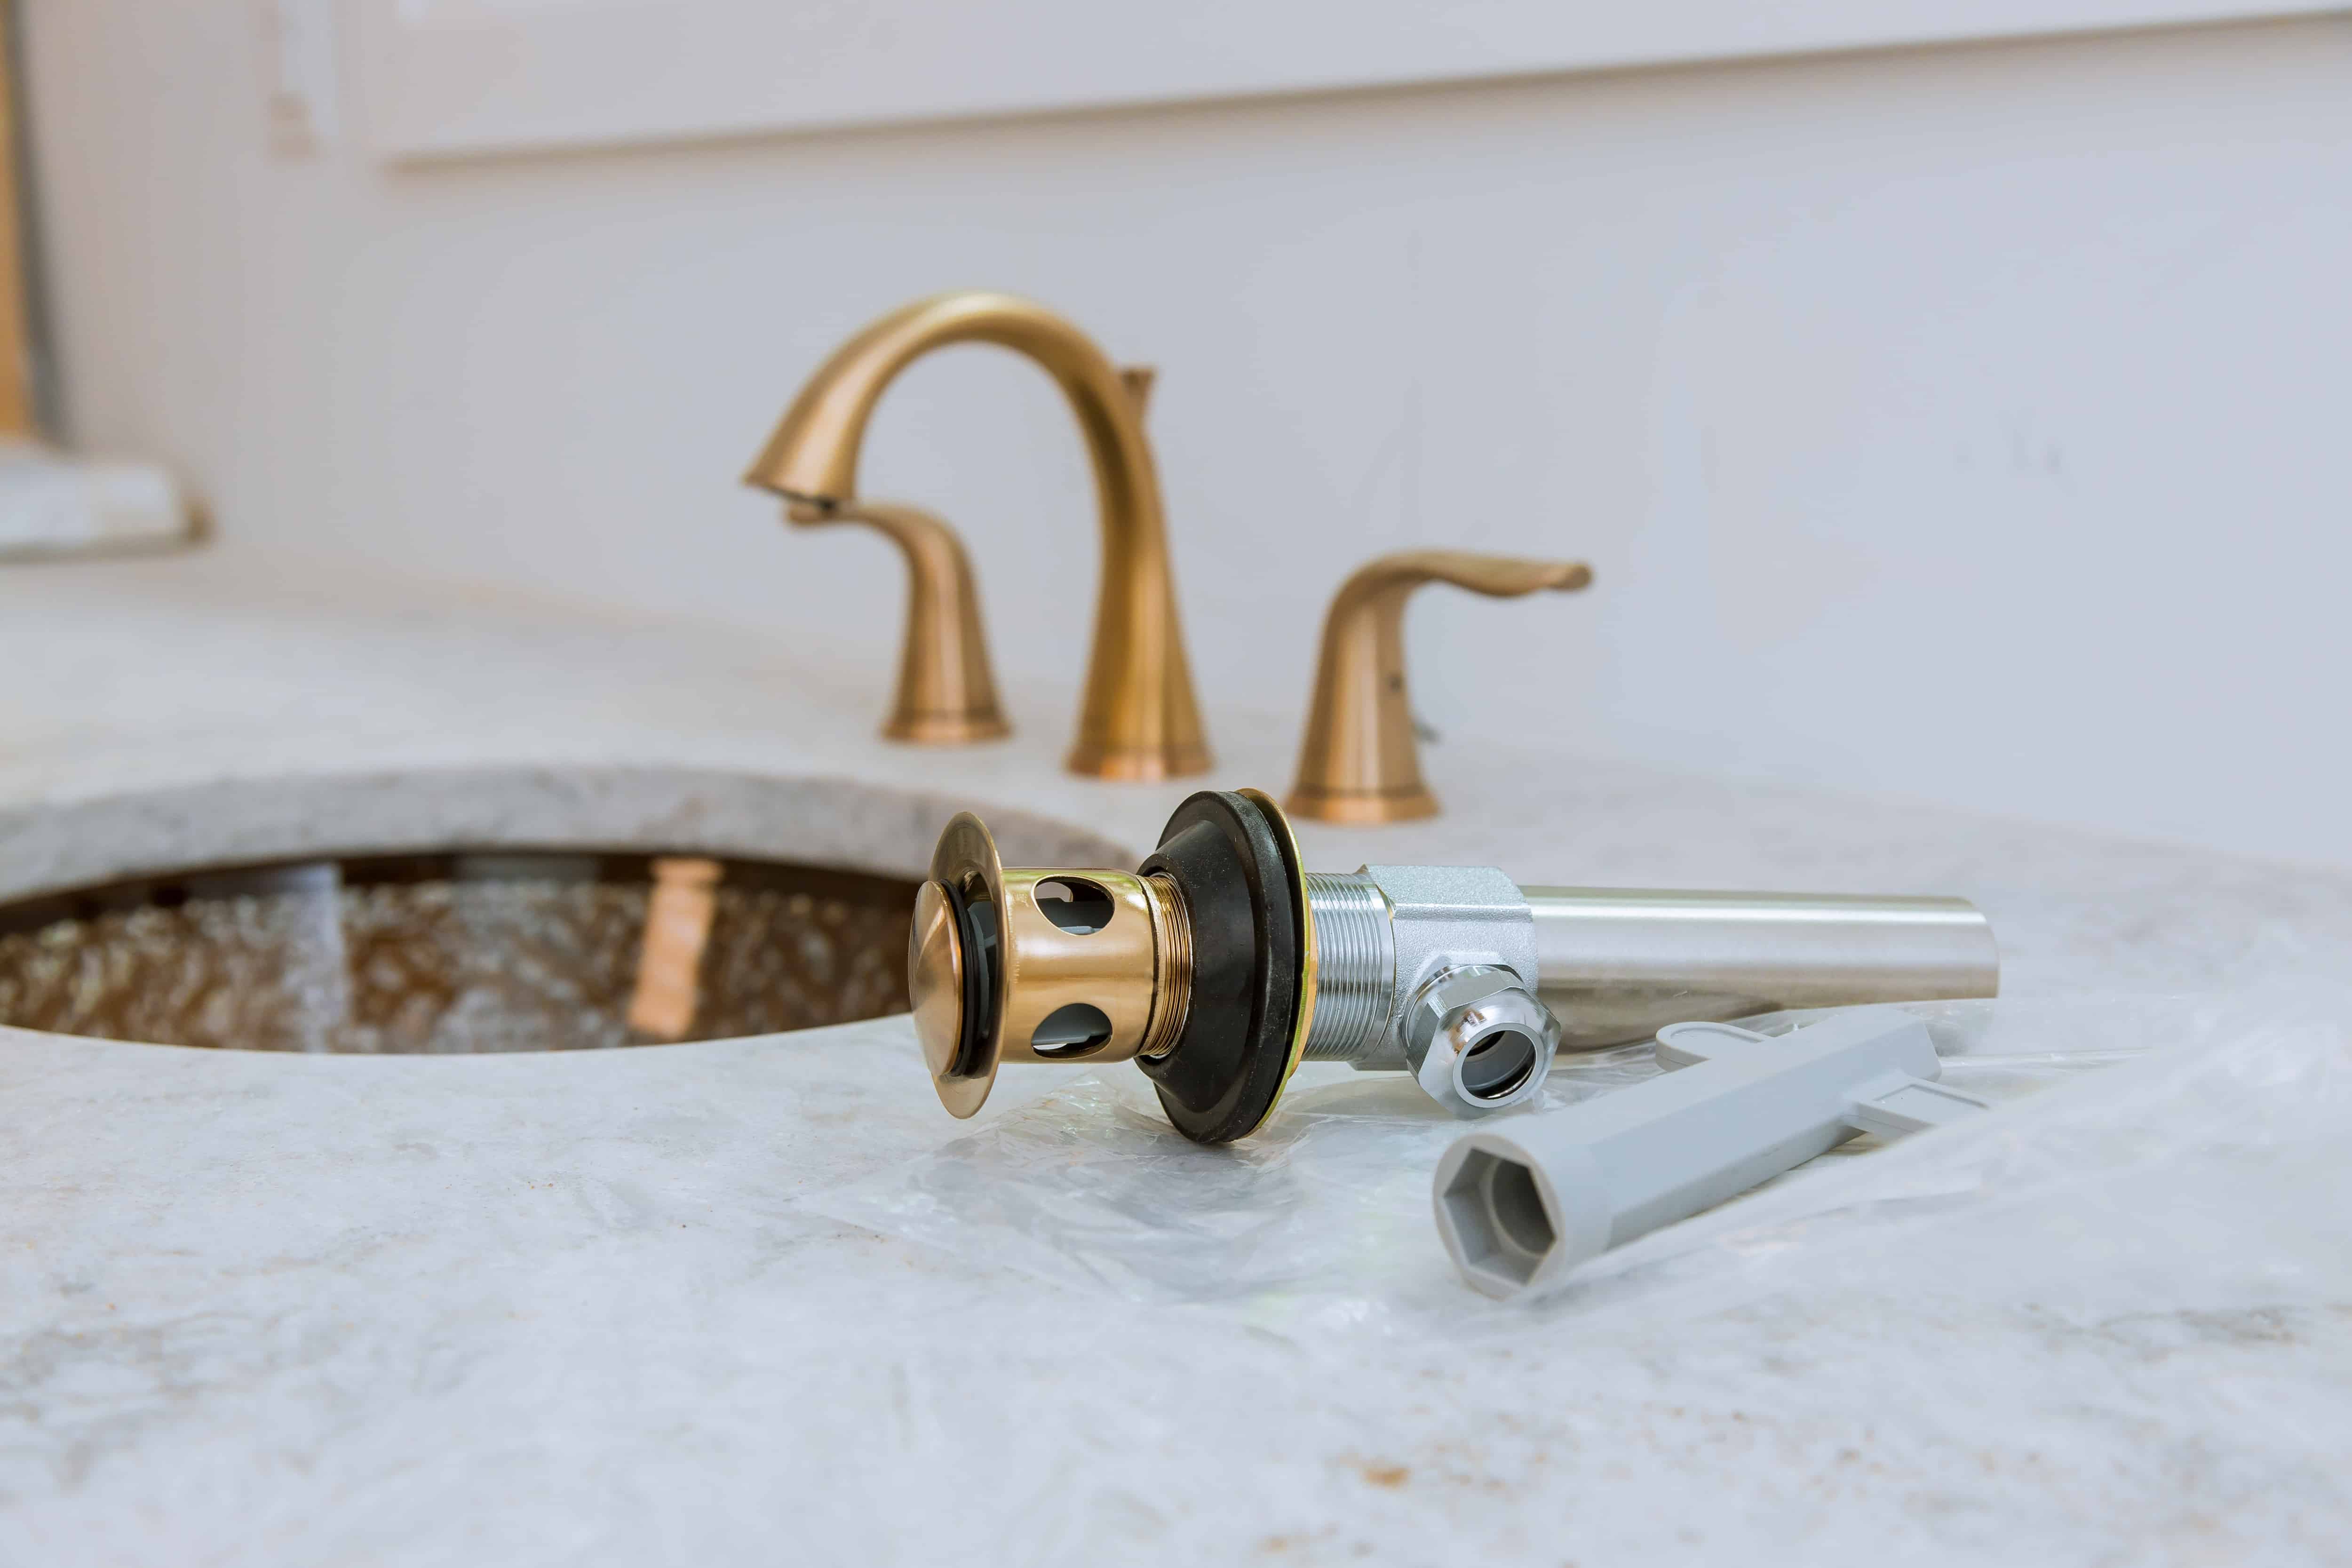 Plumbing repair service drain assemble and install bathroom sink